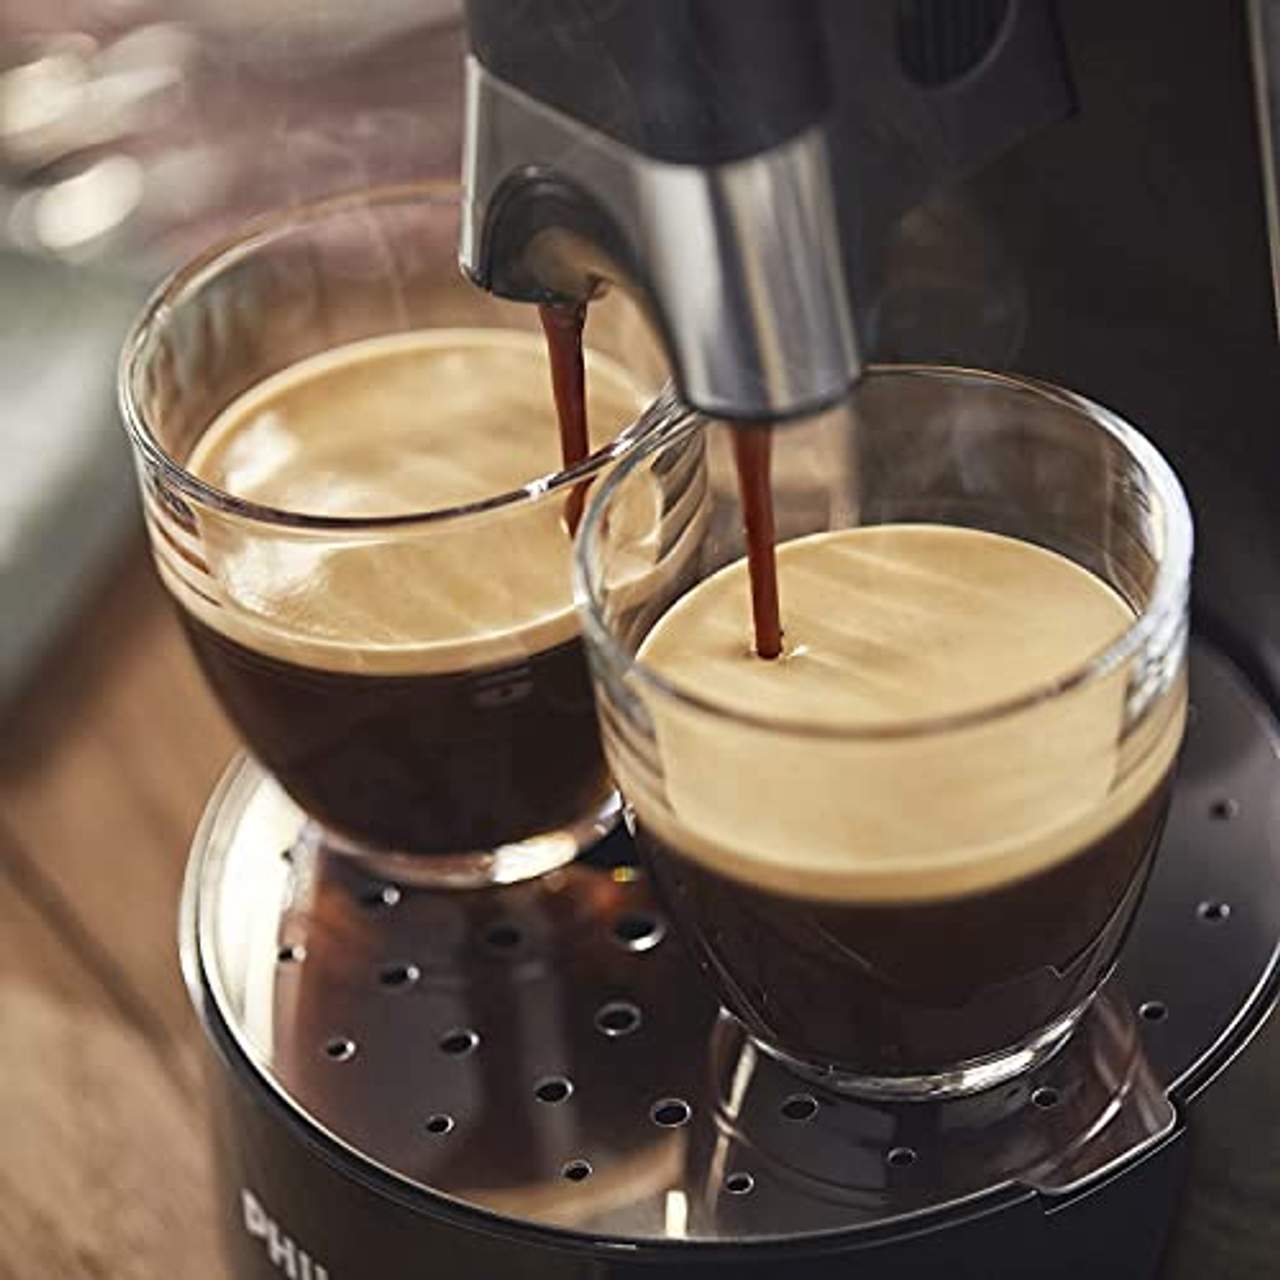 ‎Philips Domestic Appliances Senseo Select CSA240/90 Kaffeepadmaschine